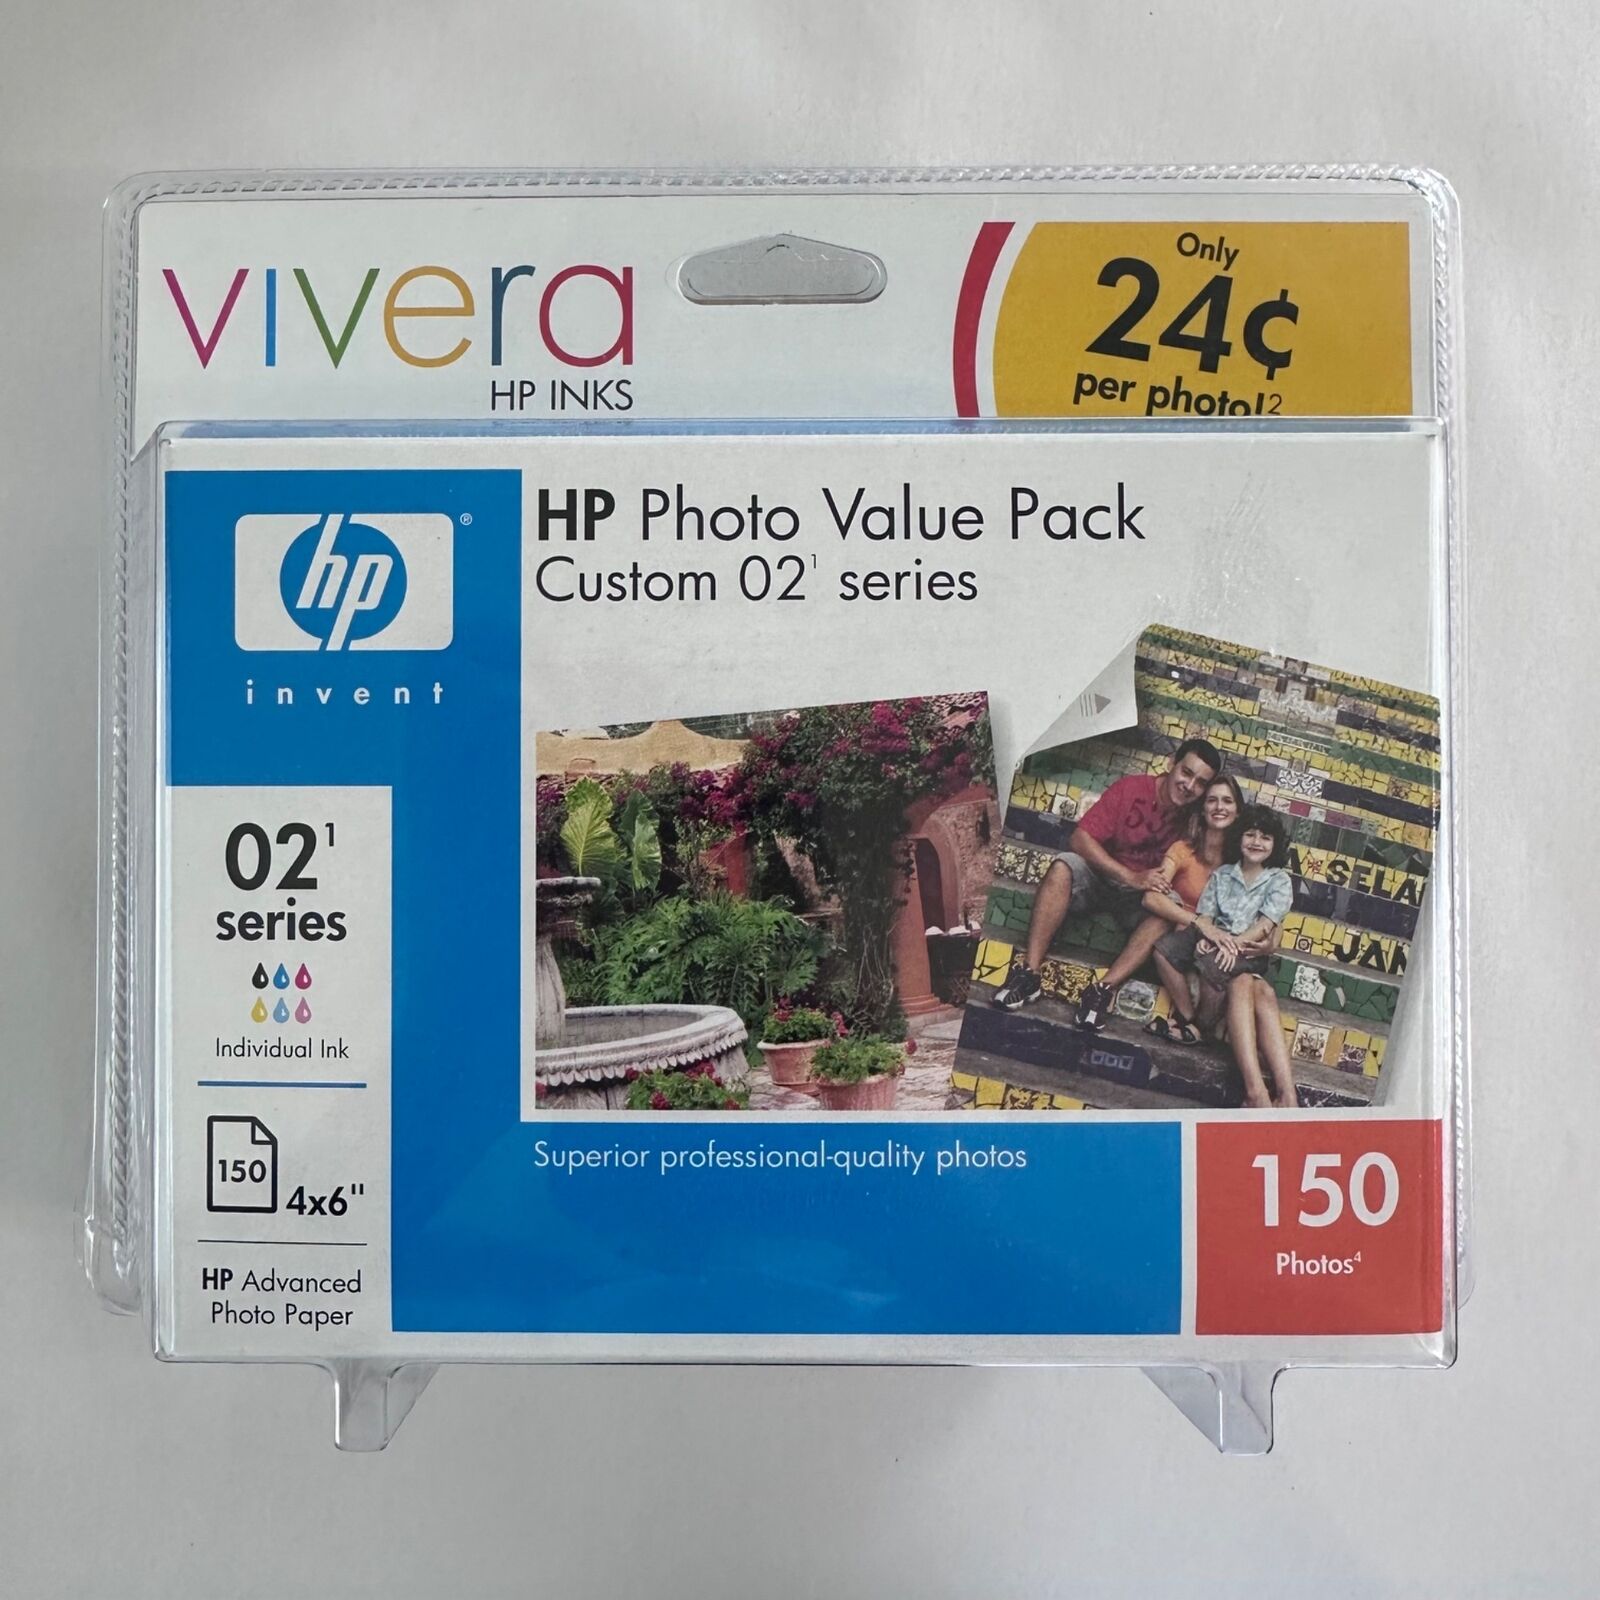 HP Vivera Custom 02 Series Photo Value Pack Ink & Photo Paper EXP 03/08